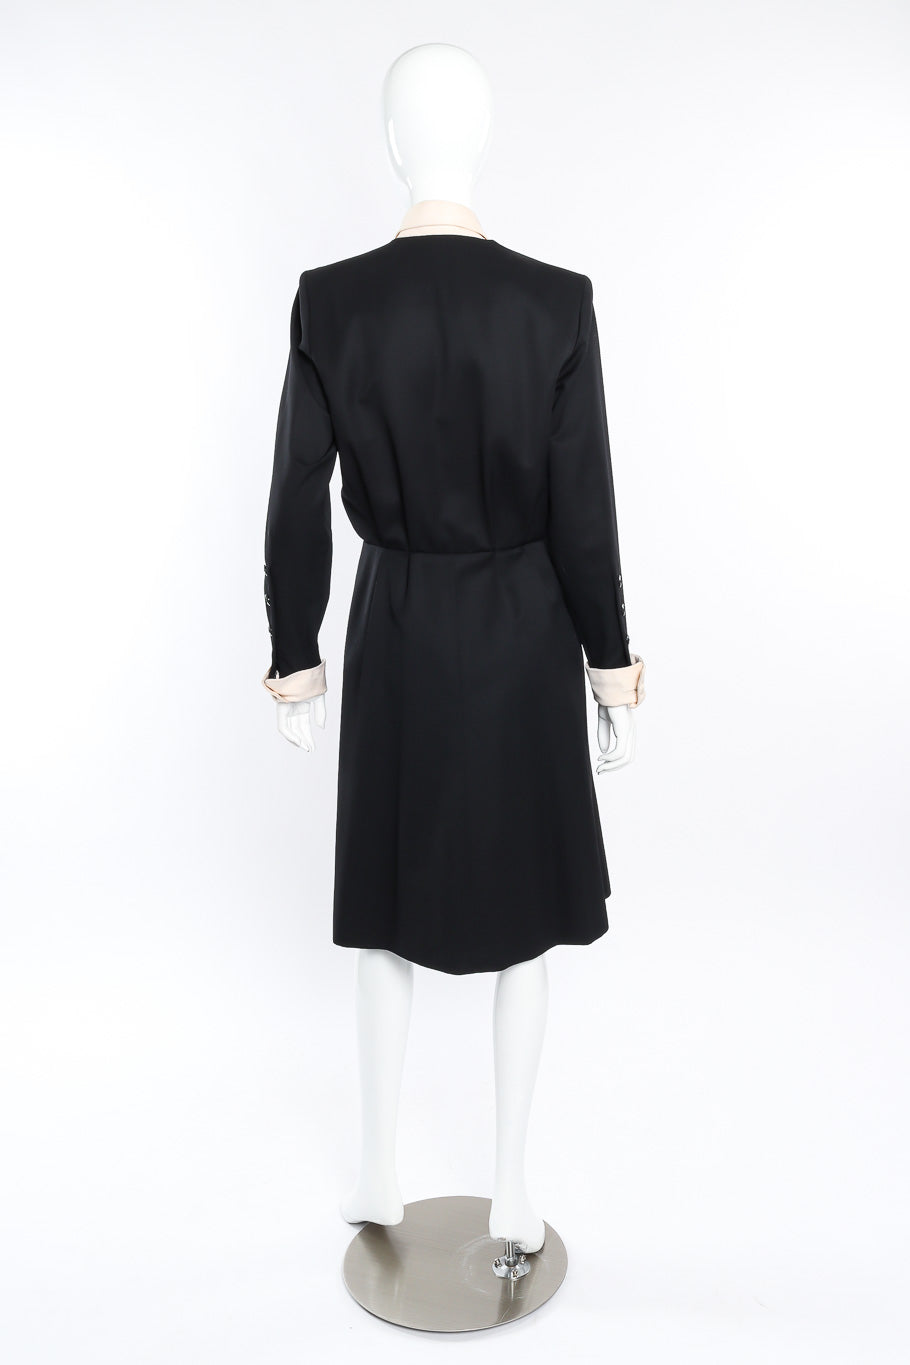 Vintage Yves Saint Laurent Collared Blazer Dress back view on mannequin @Recessla